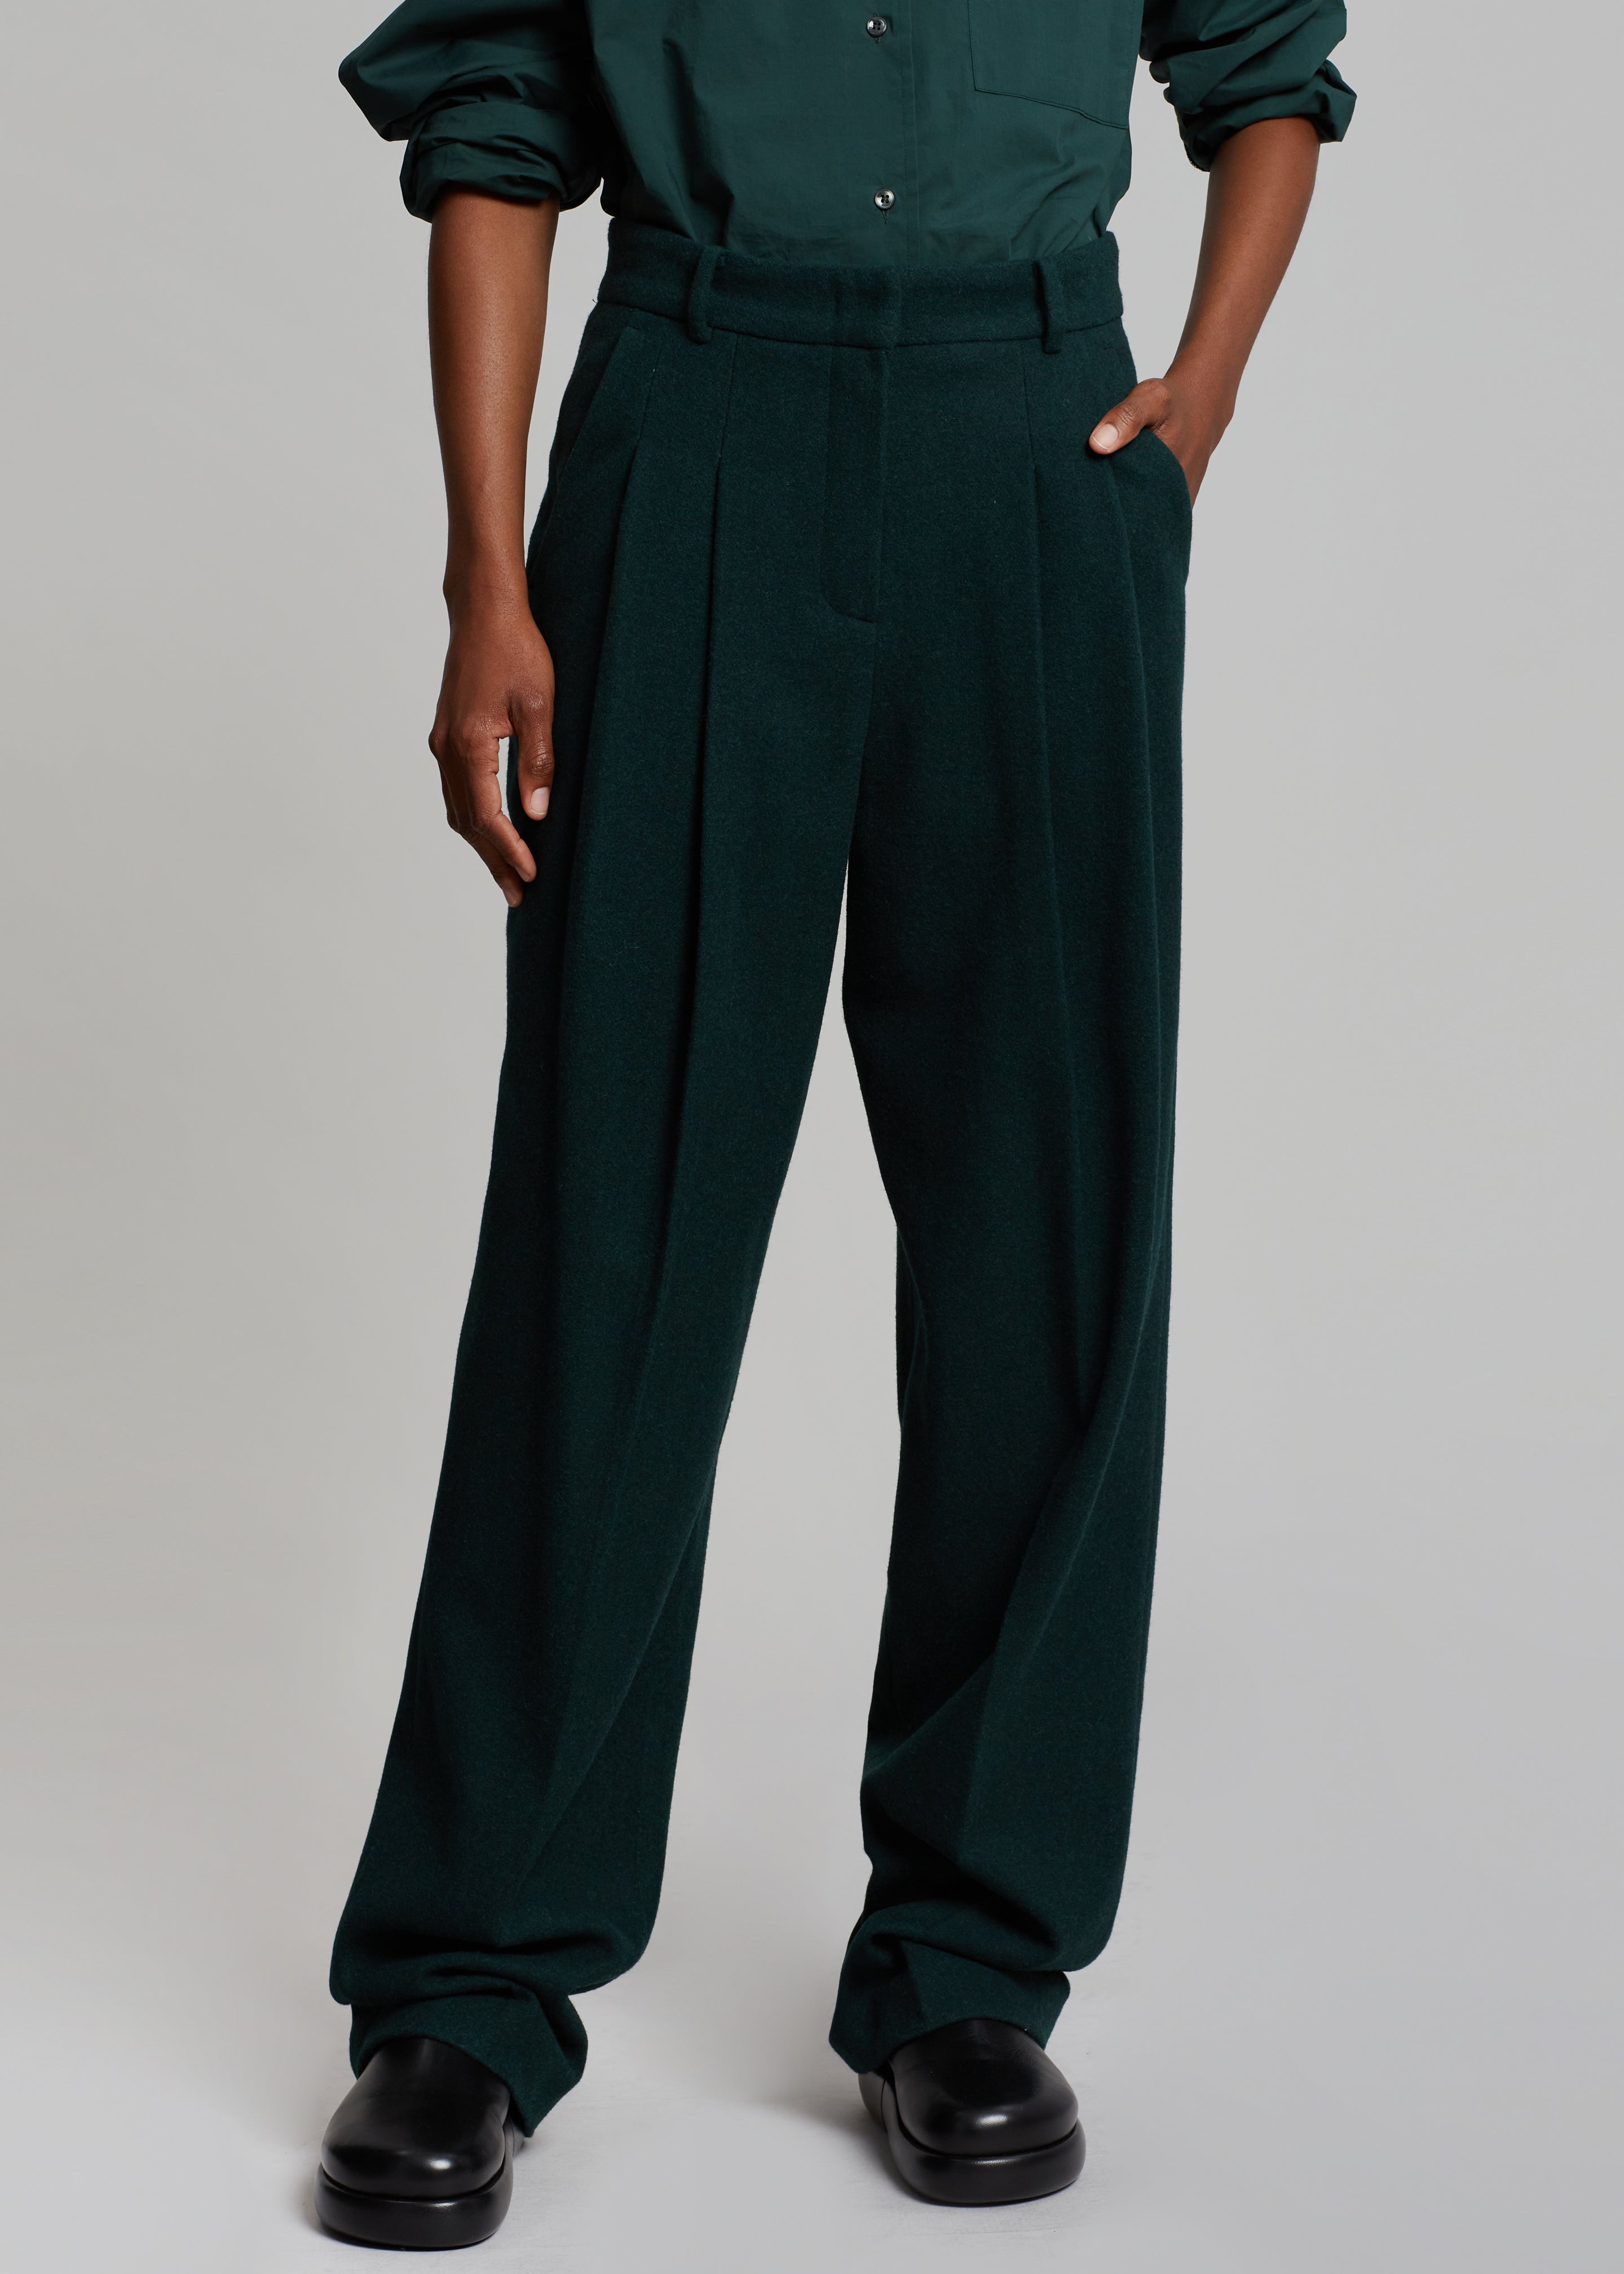 Buy Olive Green Merino Wool Pants For Men Online In India